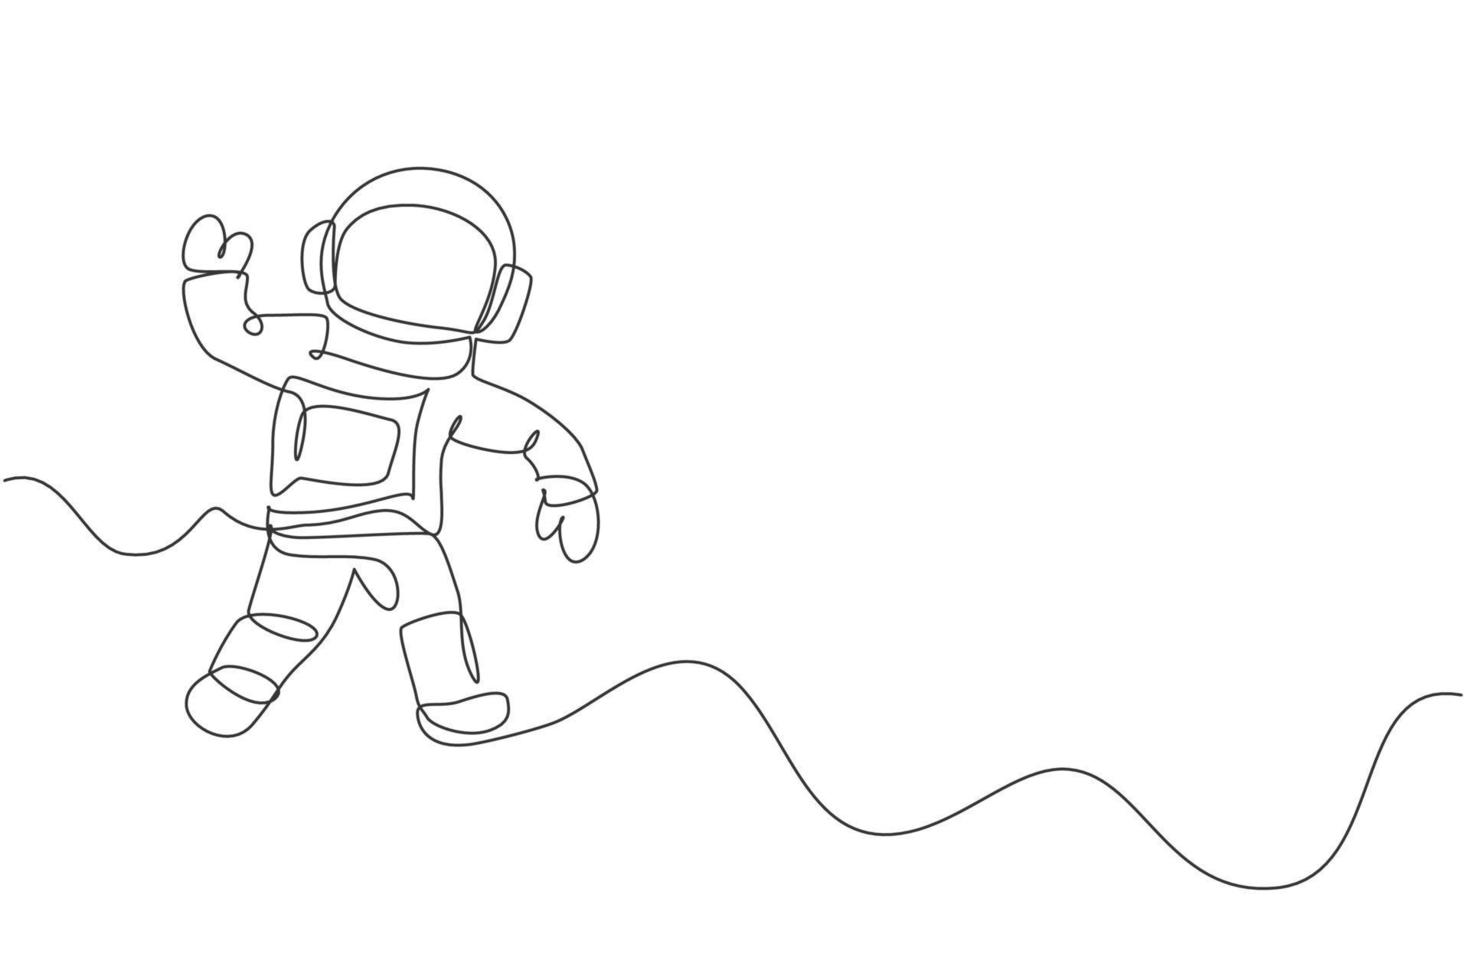 en kontinuerlig linjeteckning av ung astronautforskare som utforskar rymden i retrostil. rymdman kosmos upptäckt koncept. dynamisk enkel linje rita design grafisk vektor illustration